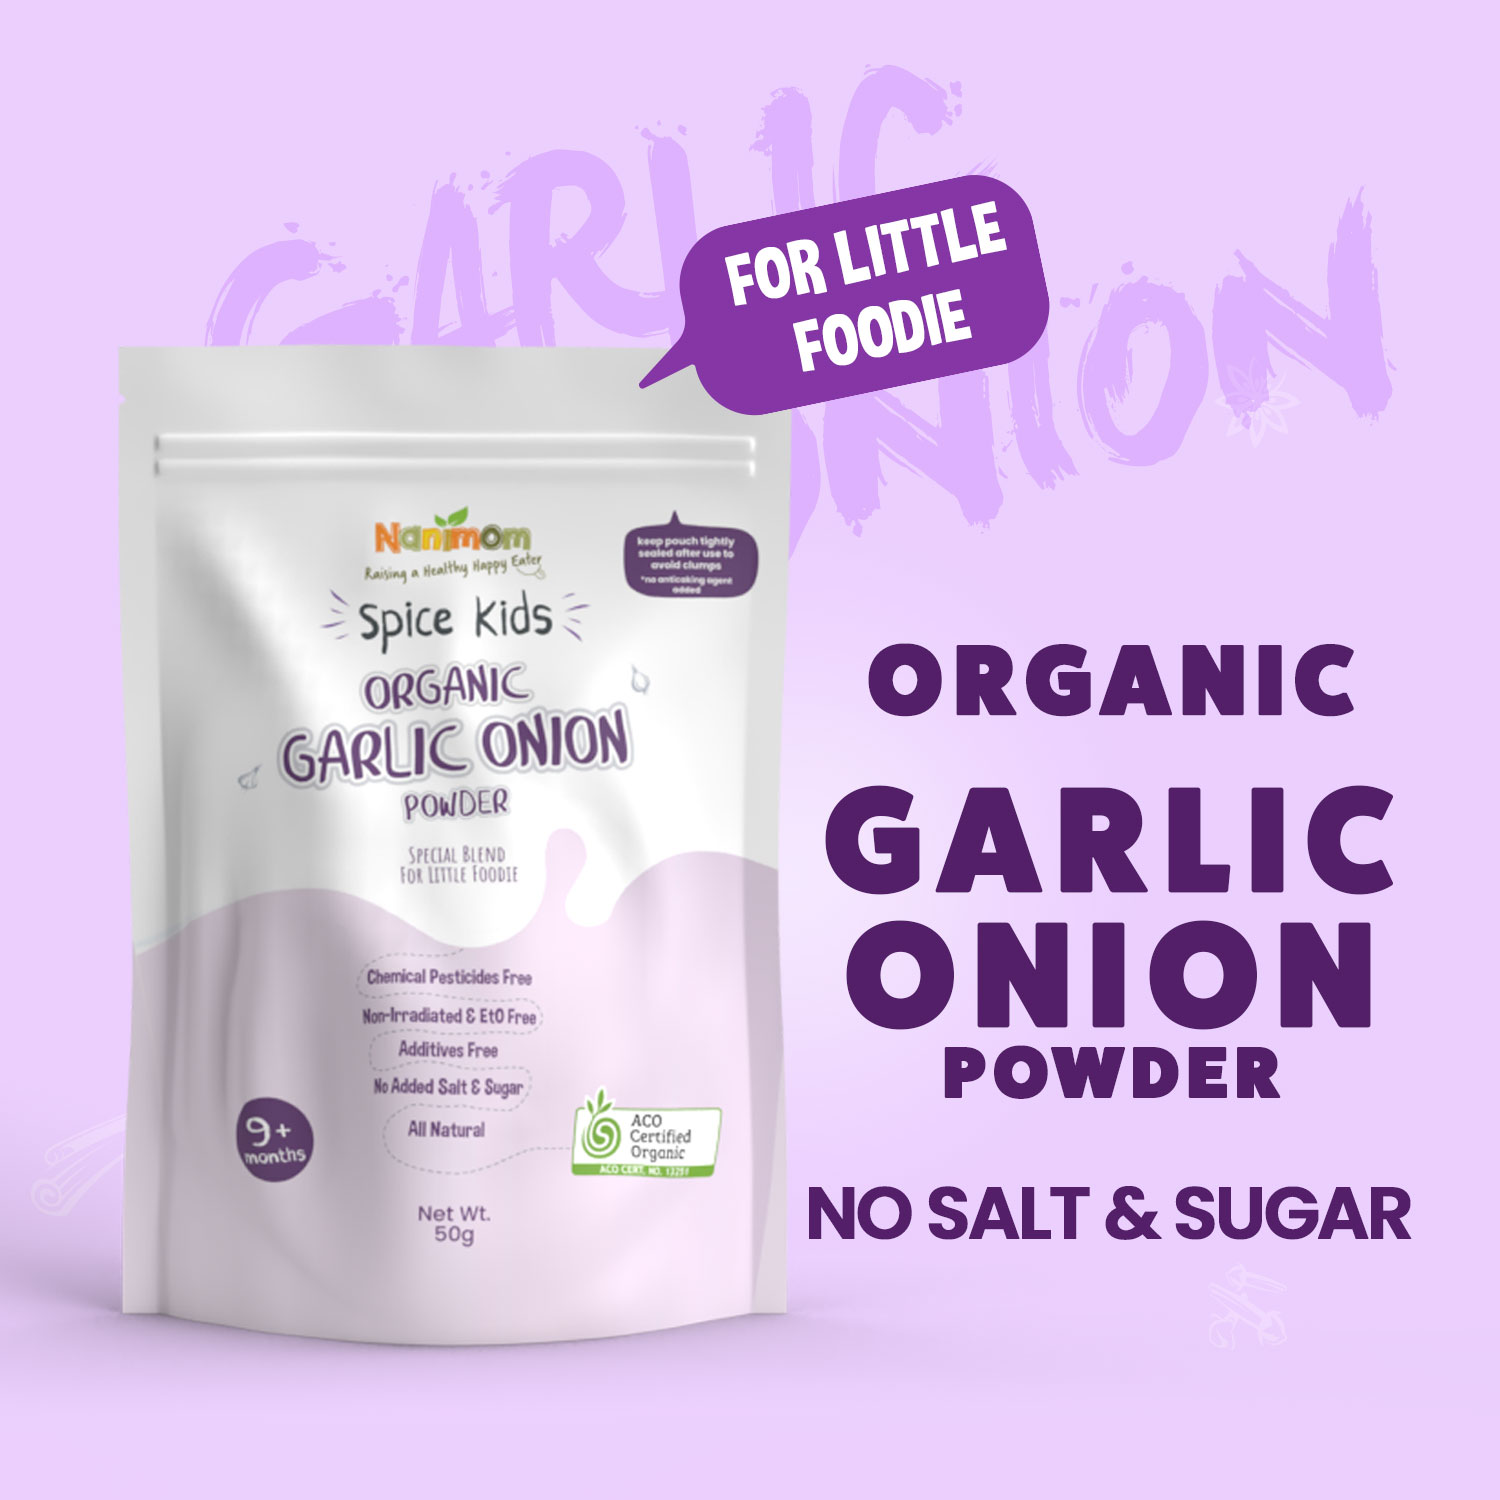 Nanimom Spice Kids Organic Garlic & Onion Powder 45g